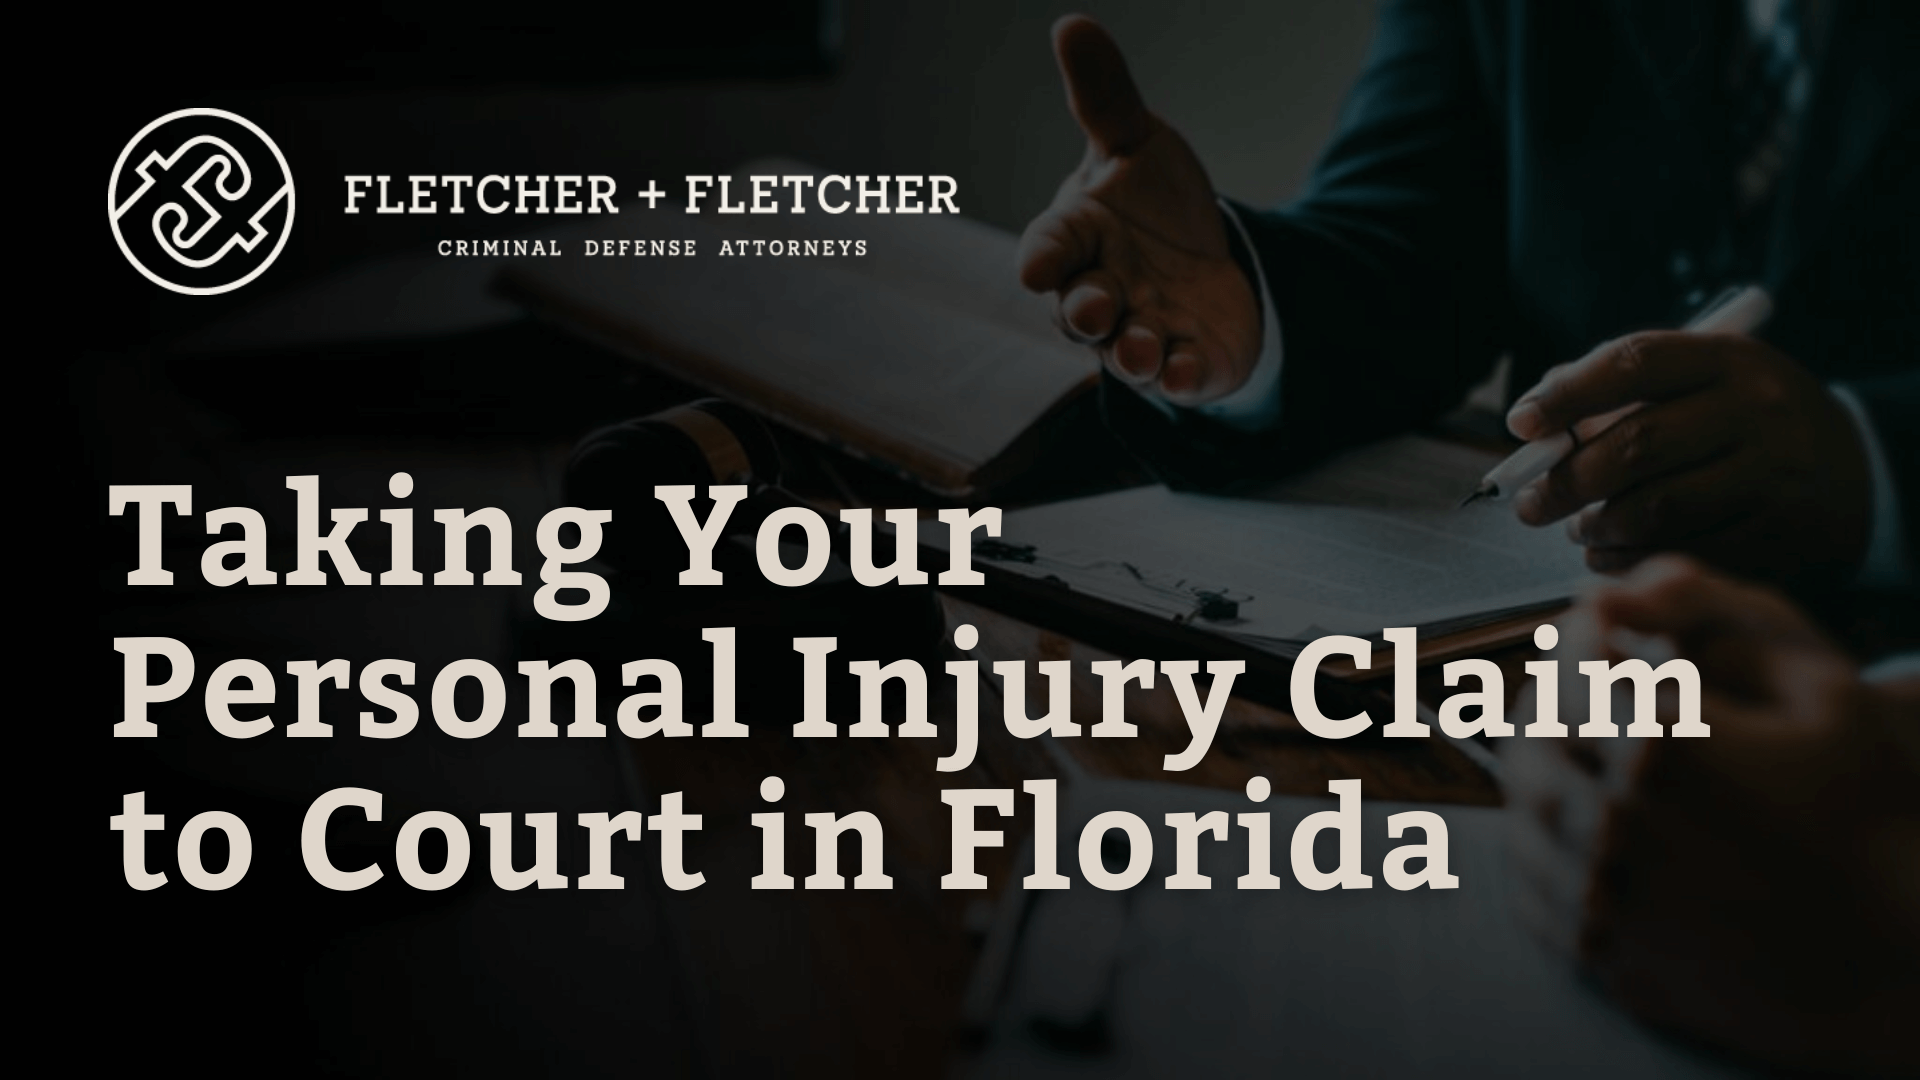 Taking Your Personal Injury Claim to Court - Fletcher Fletcher Florida criminal defense lawyers